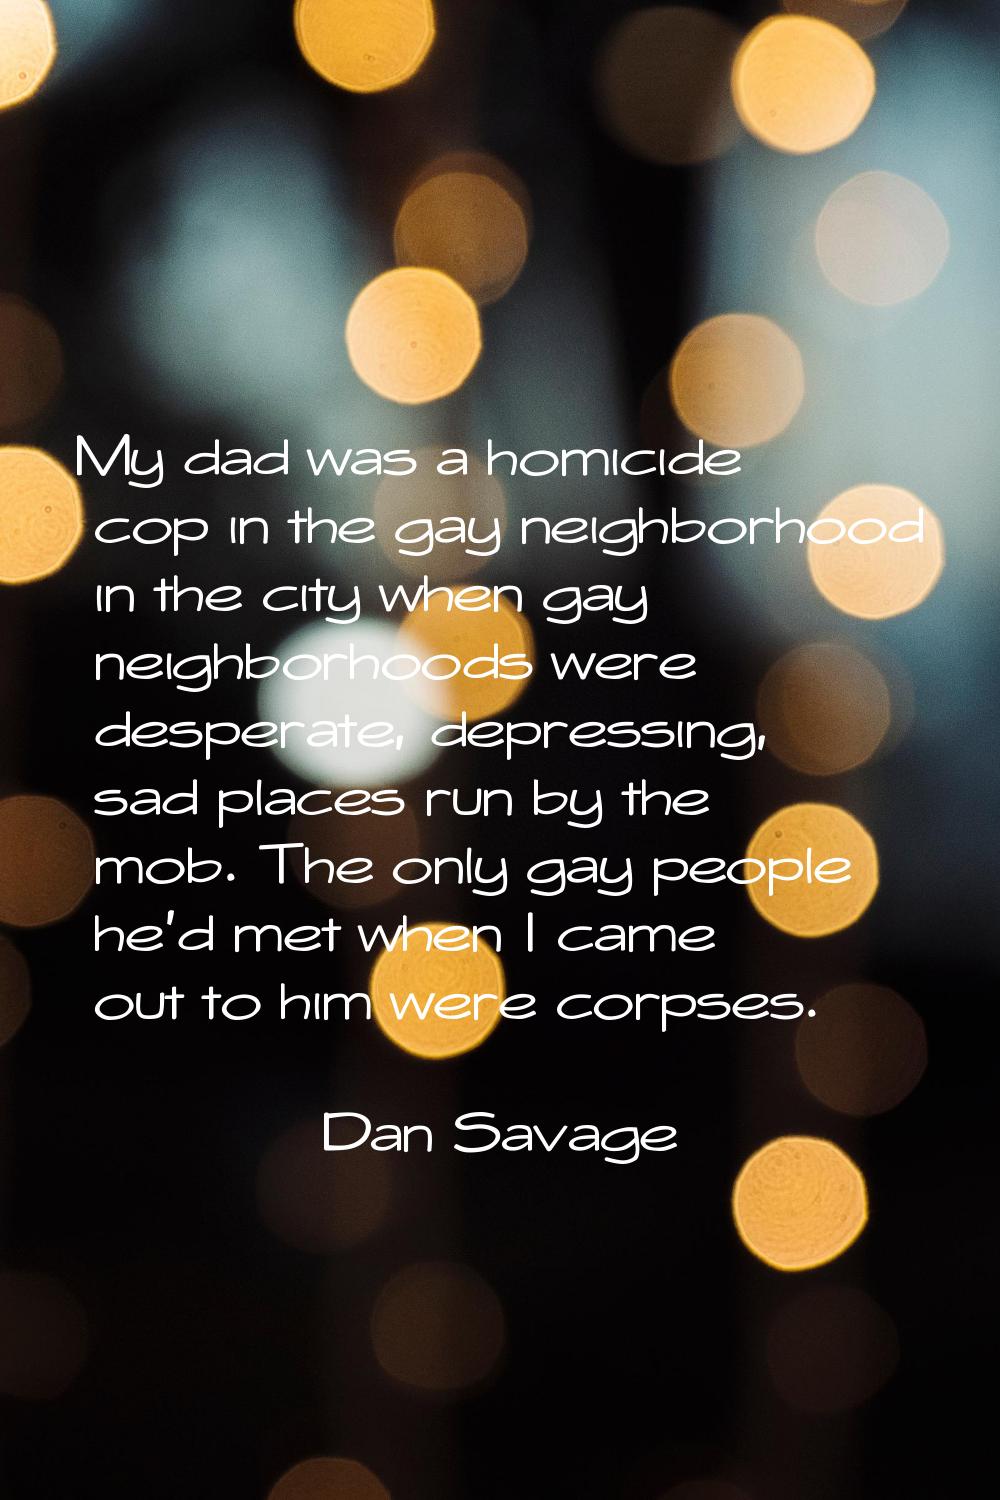 My dad was a homicide cop in the gay neighborhood in the city when gay neighborhoods were desperate